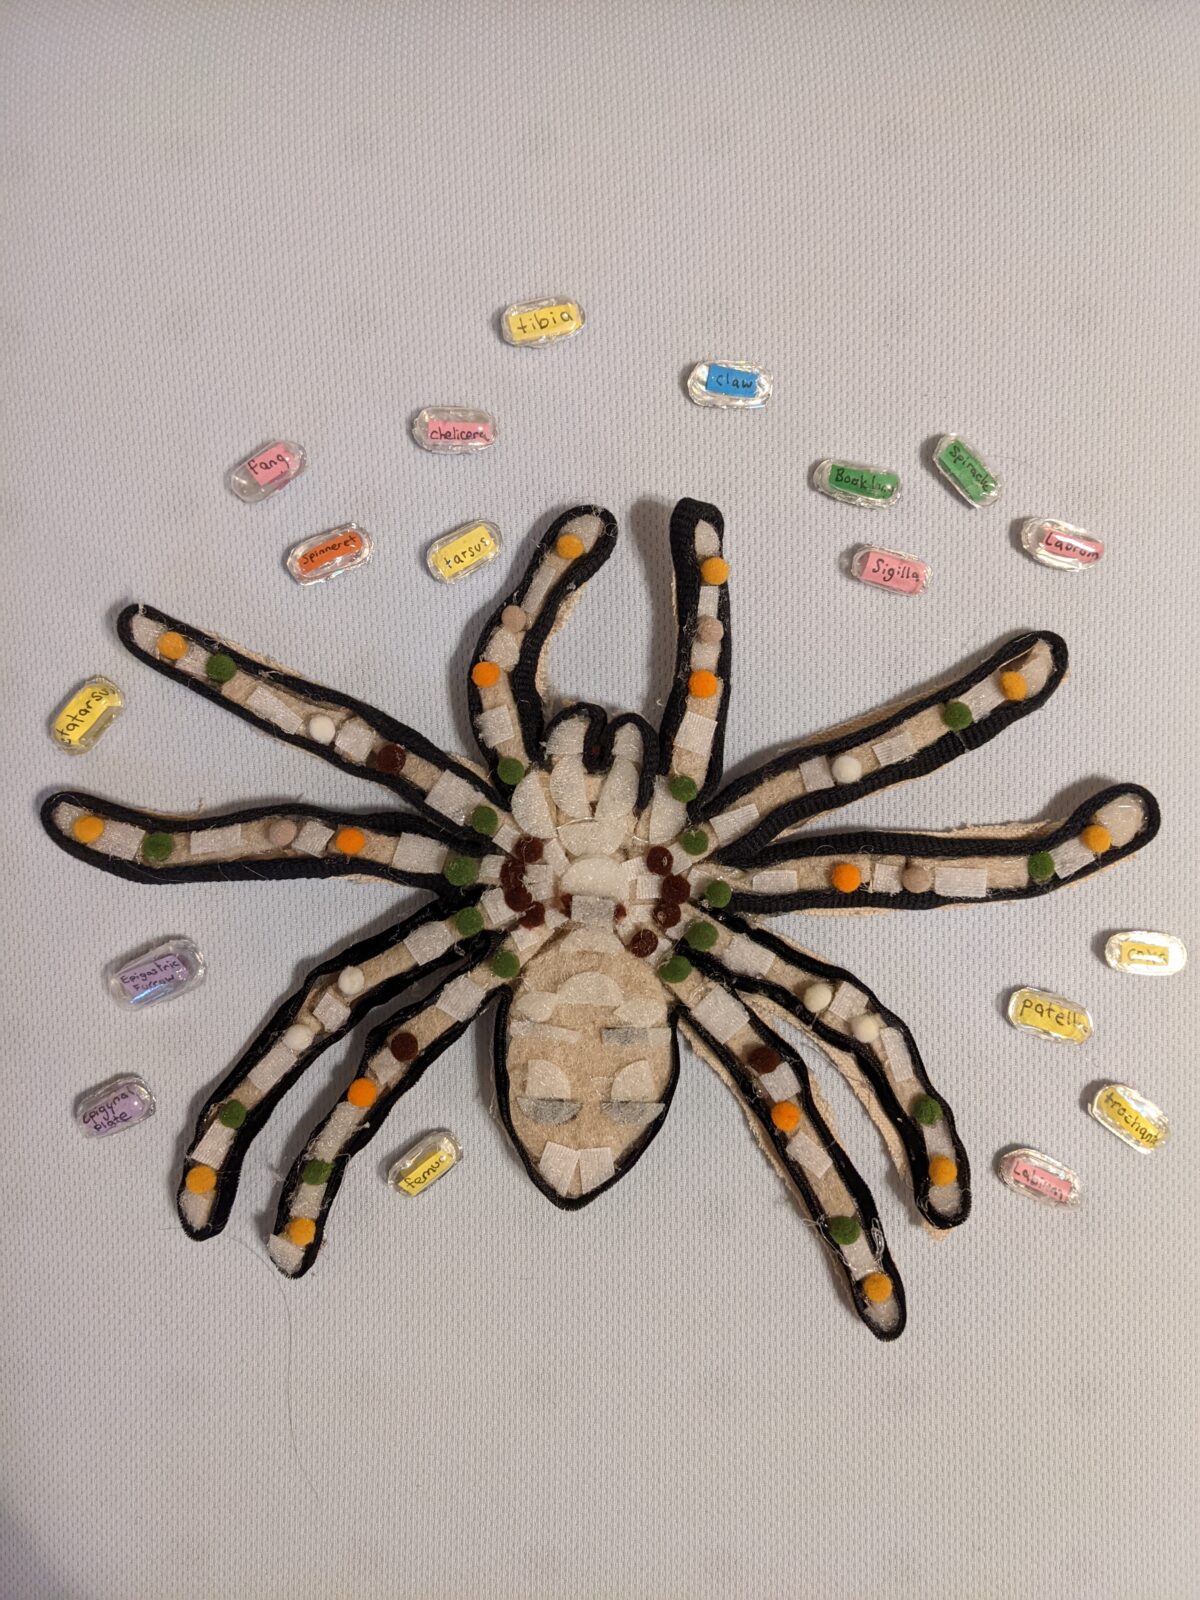 Handmade Female Tarantula Exterior Ventral View Anatomy Labelling Toy